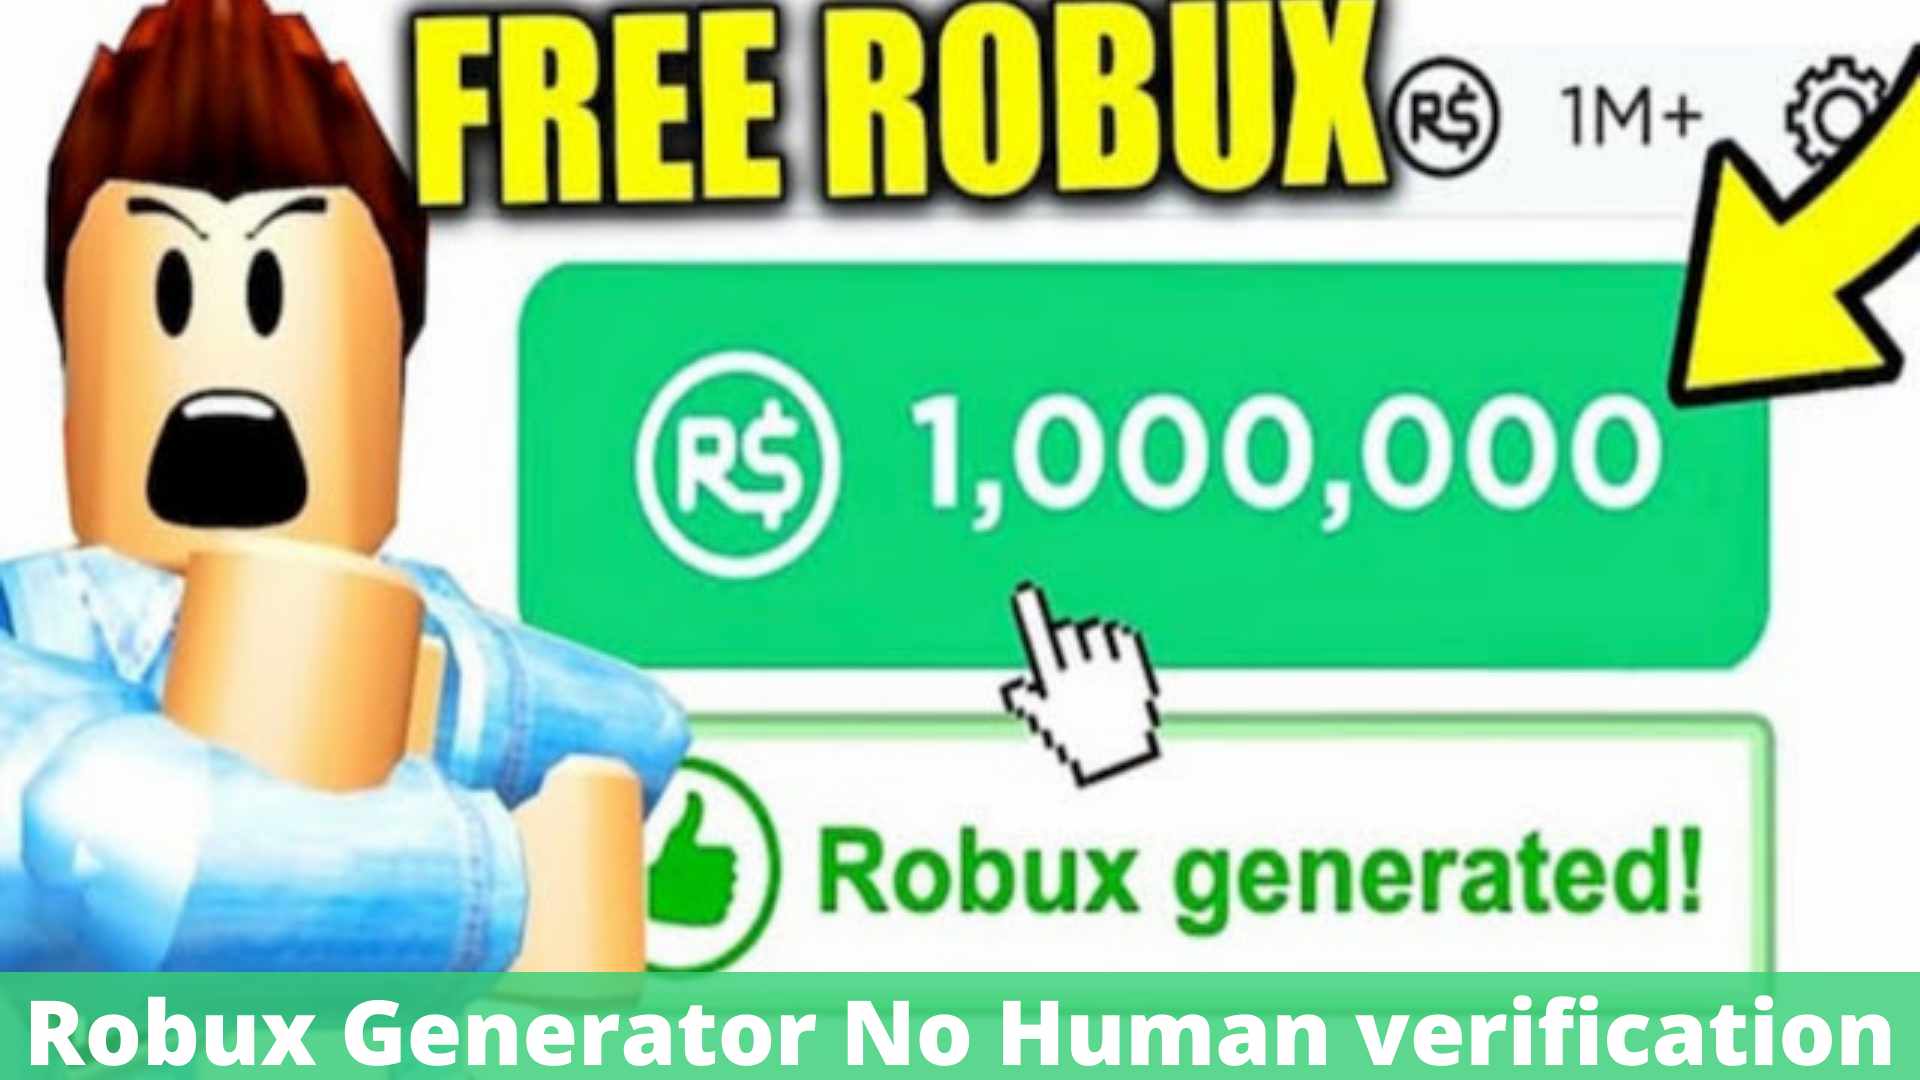 4. Free 400 Robux Codes Generator - No Human Verification - wide 1